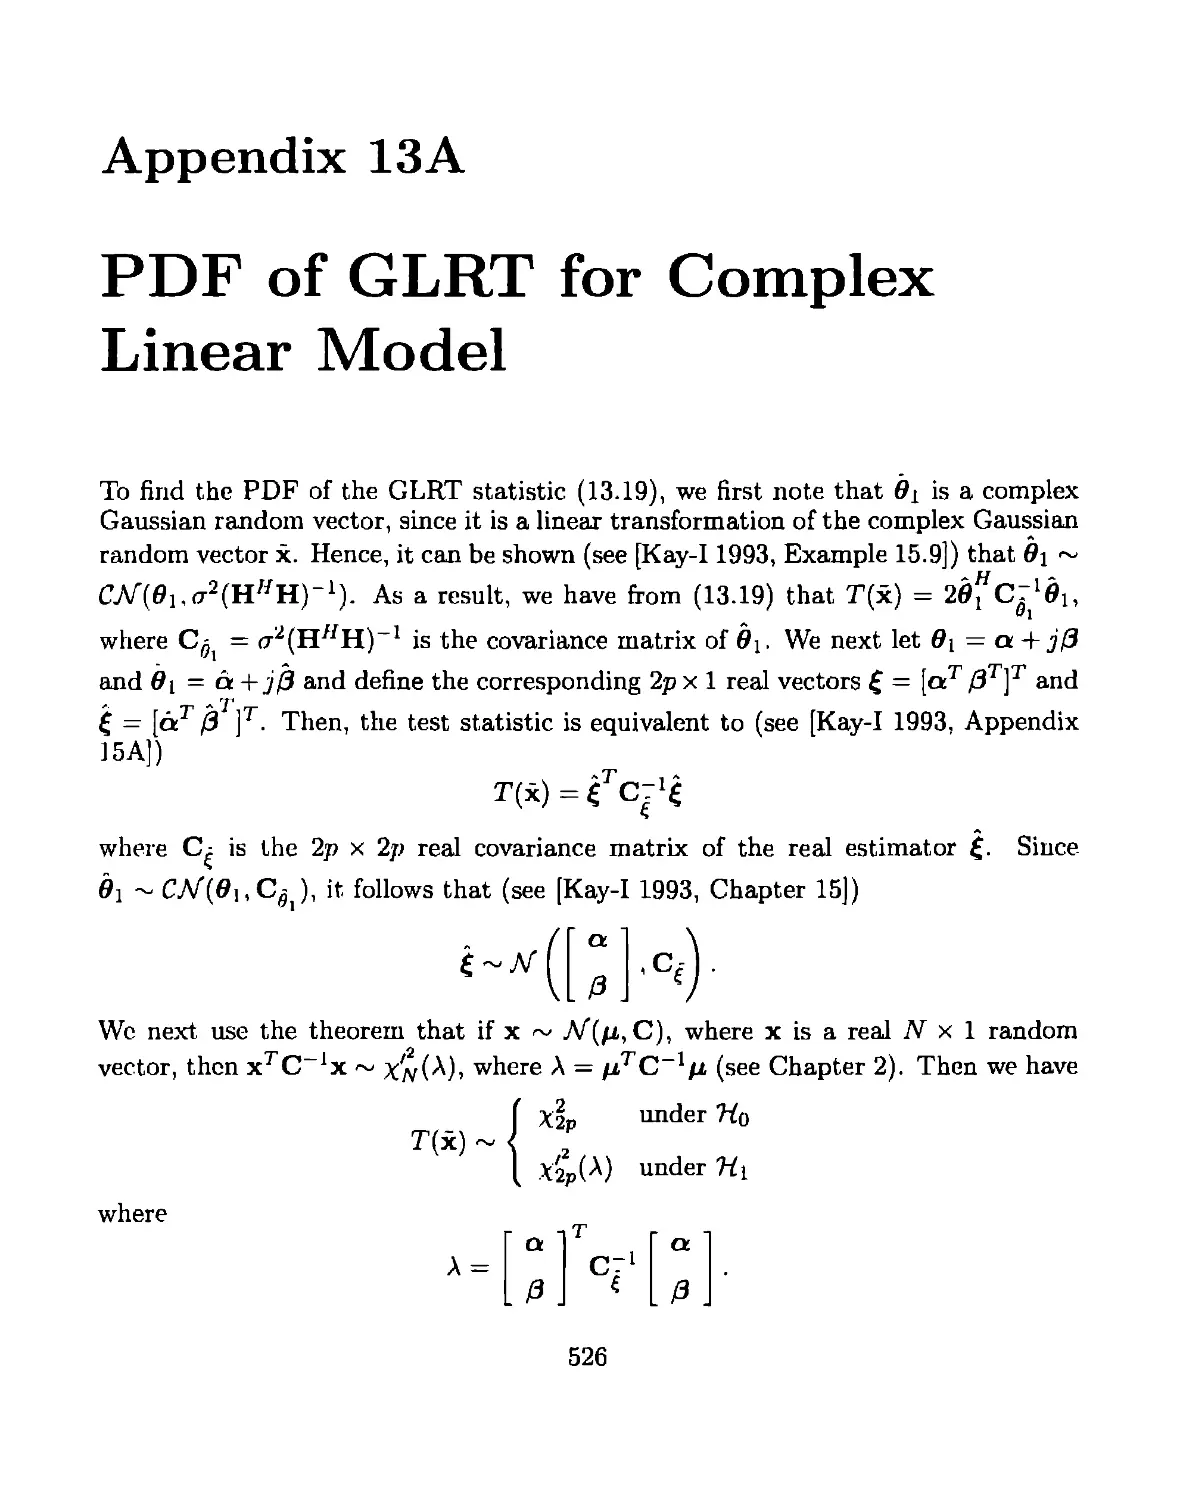 Appendix 13A PFD of GLRT for Complex Linear Model